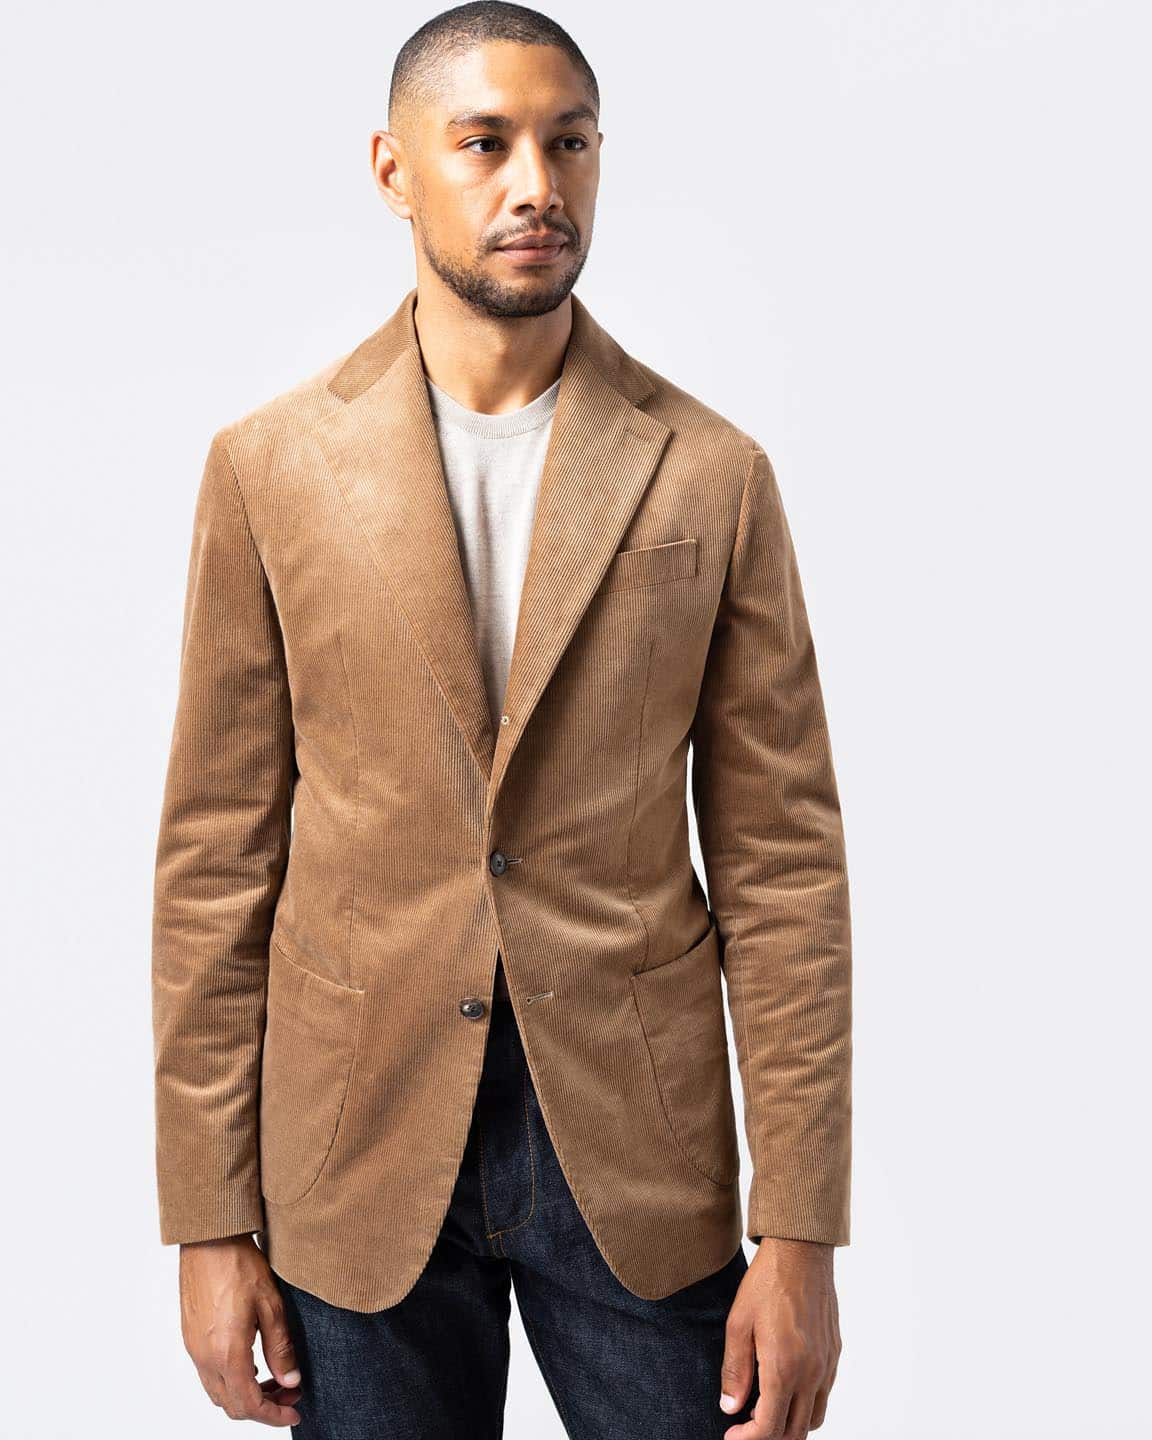 Jacket corduroy brown image 2